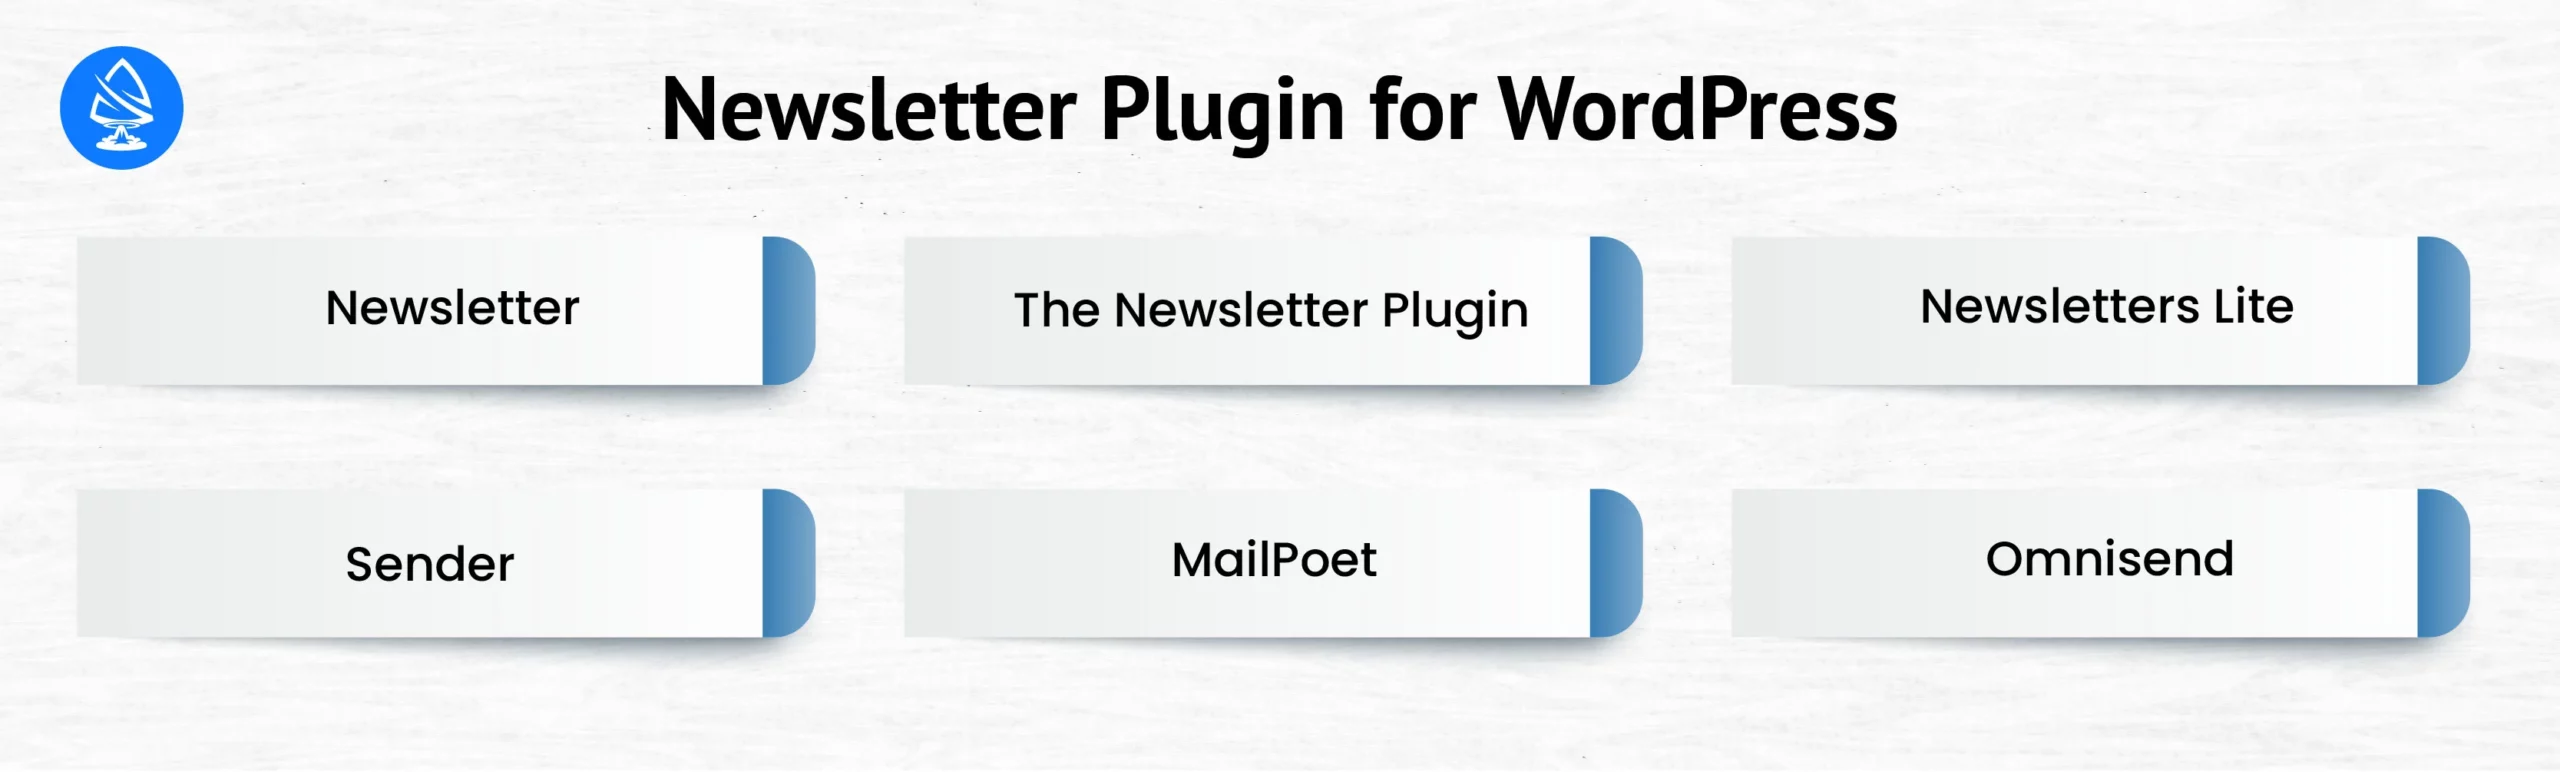 Newsletter Plugin for WordPress